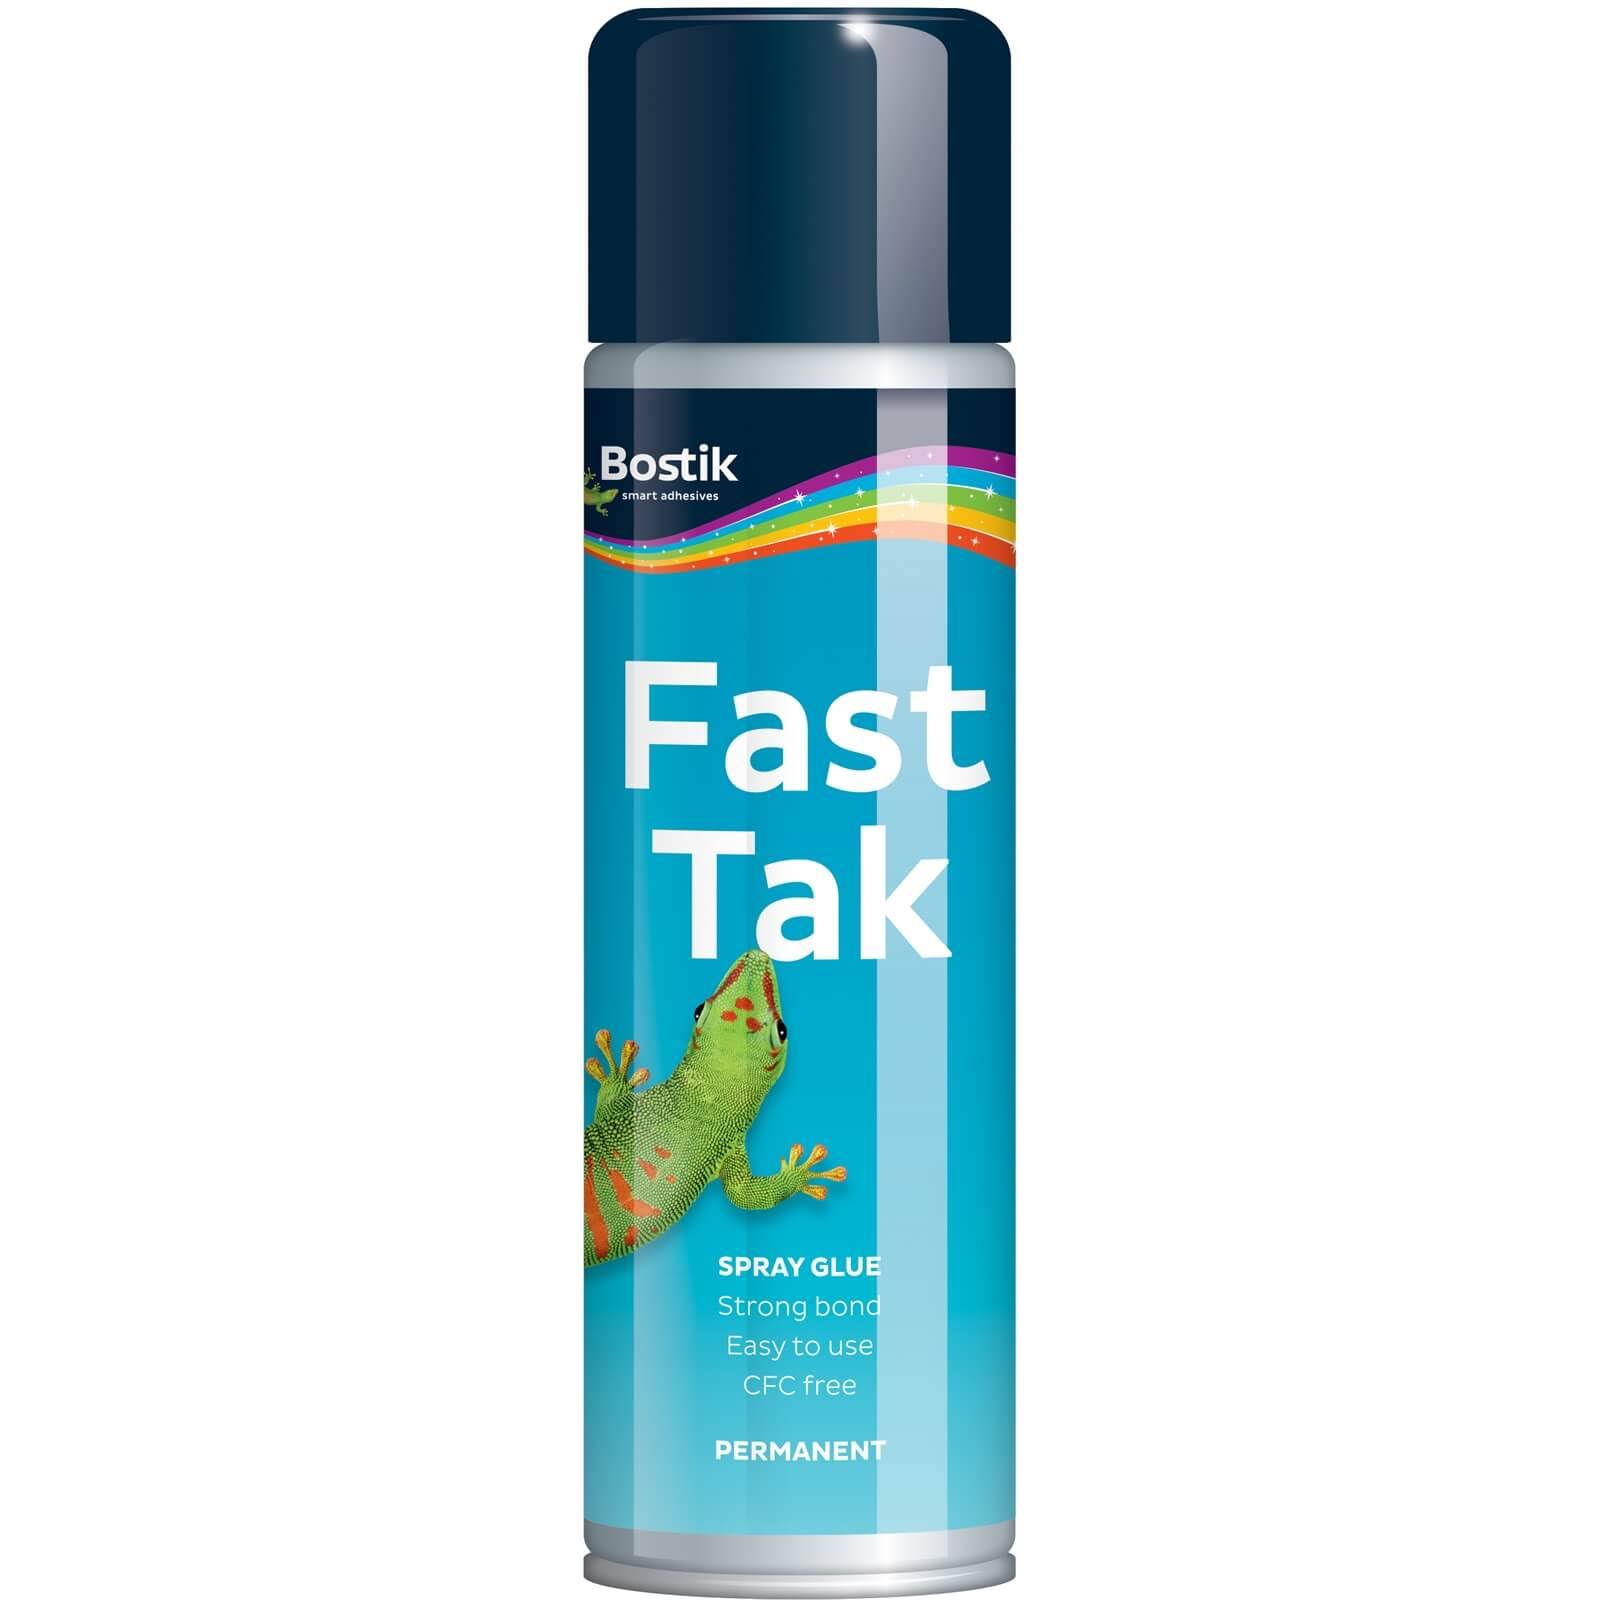 Bostik Fast Tak Contact Adhesive Spray - 500ml